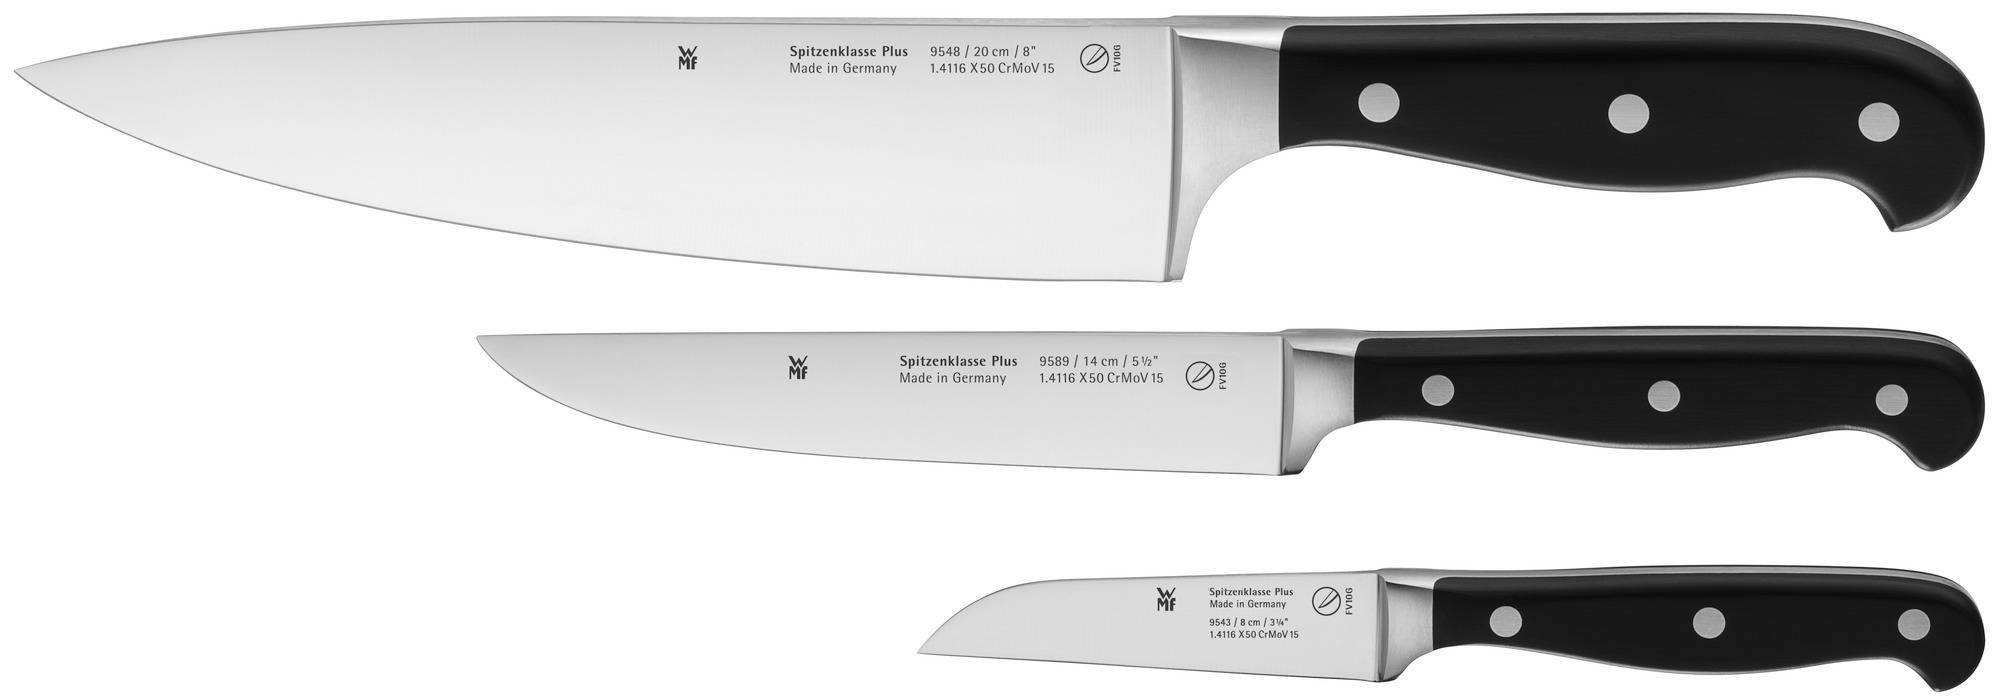 нож для стейков wmf spitzenklasse plus 12 см 1895466032 Spitzenklasse Plus 3 предмета 8/12/20 см